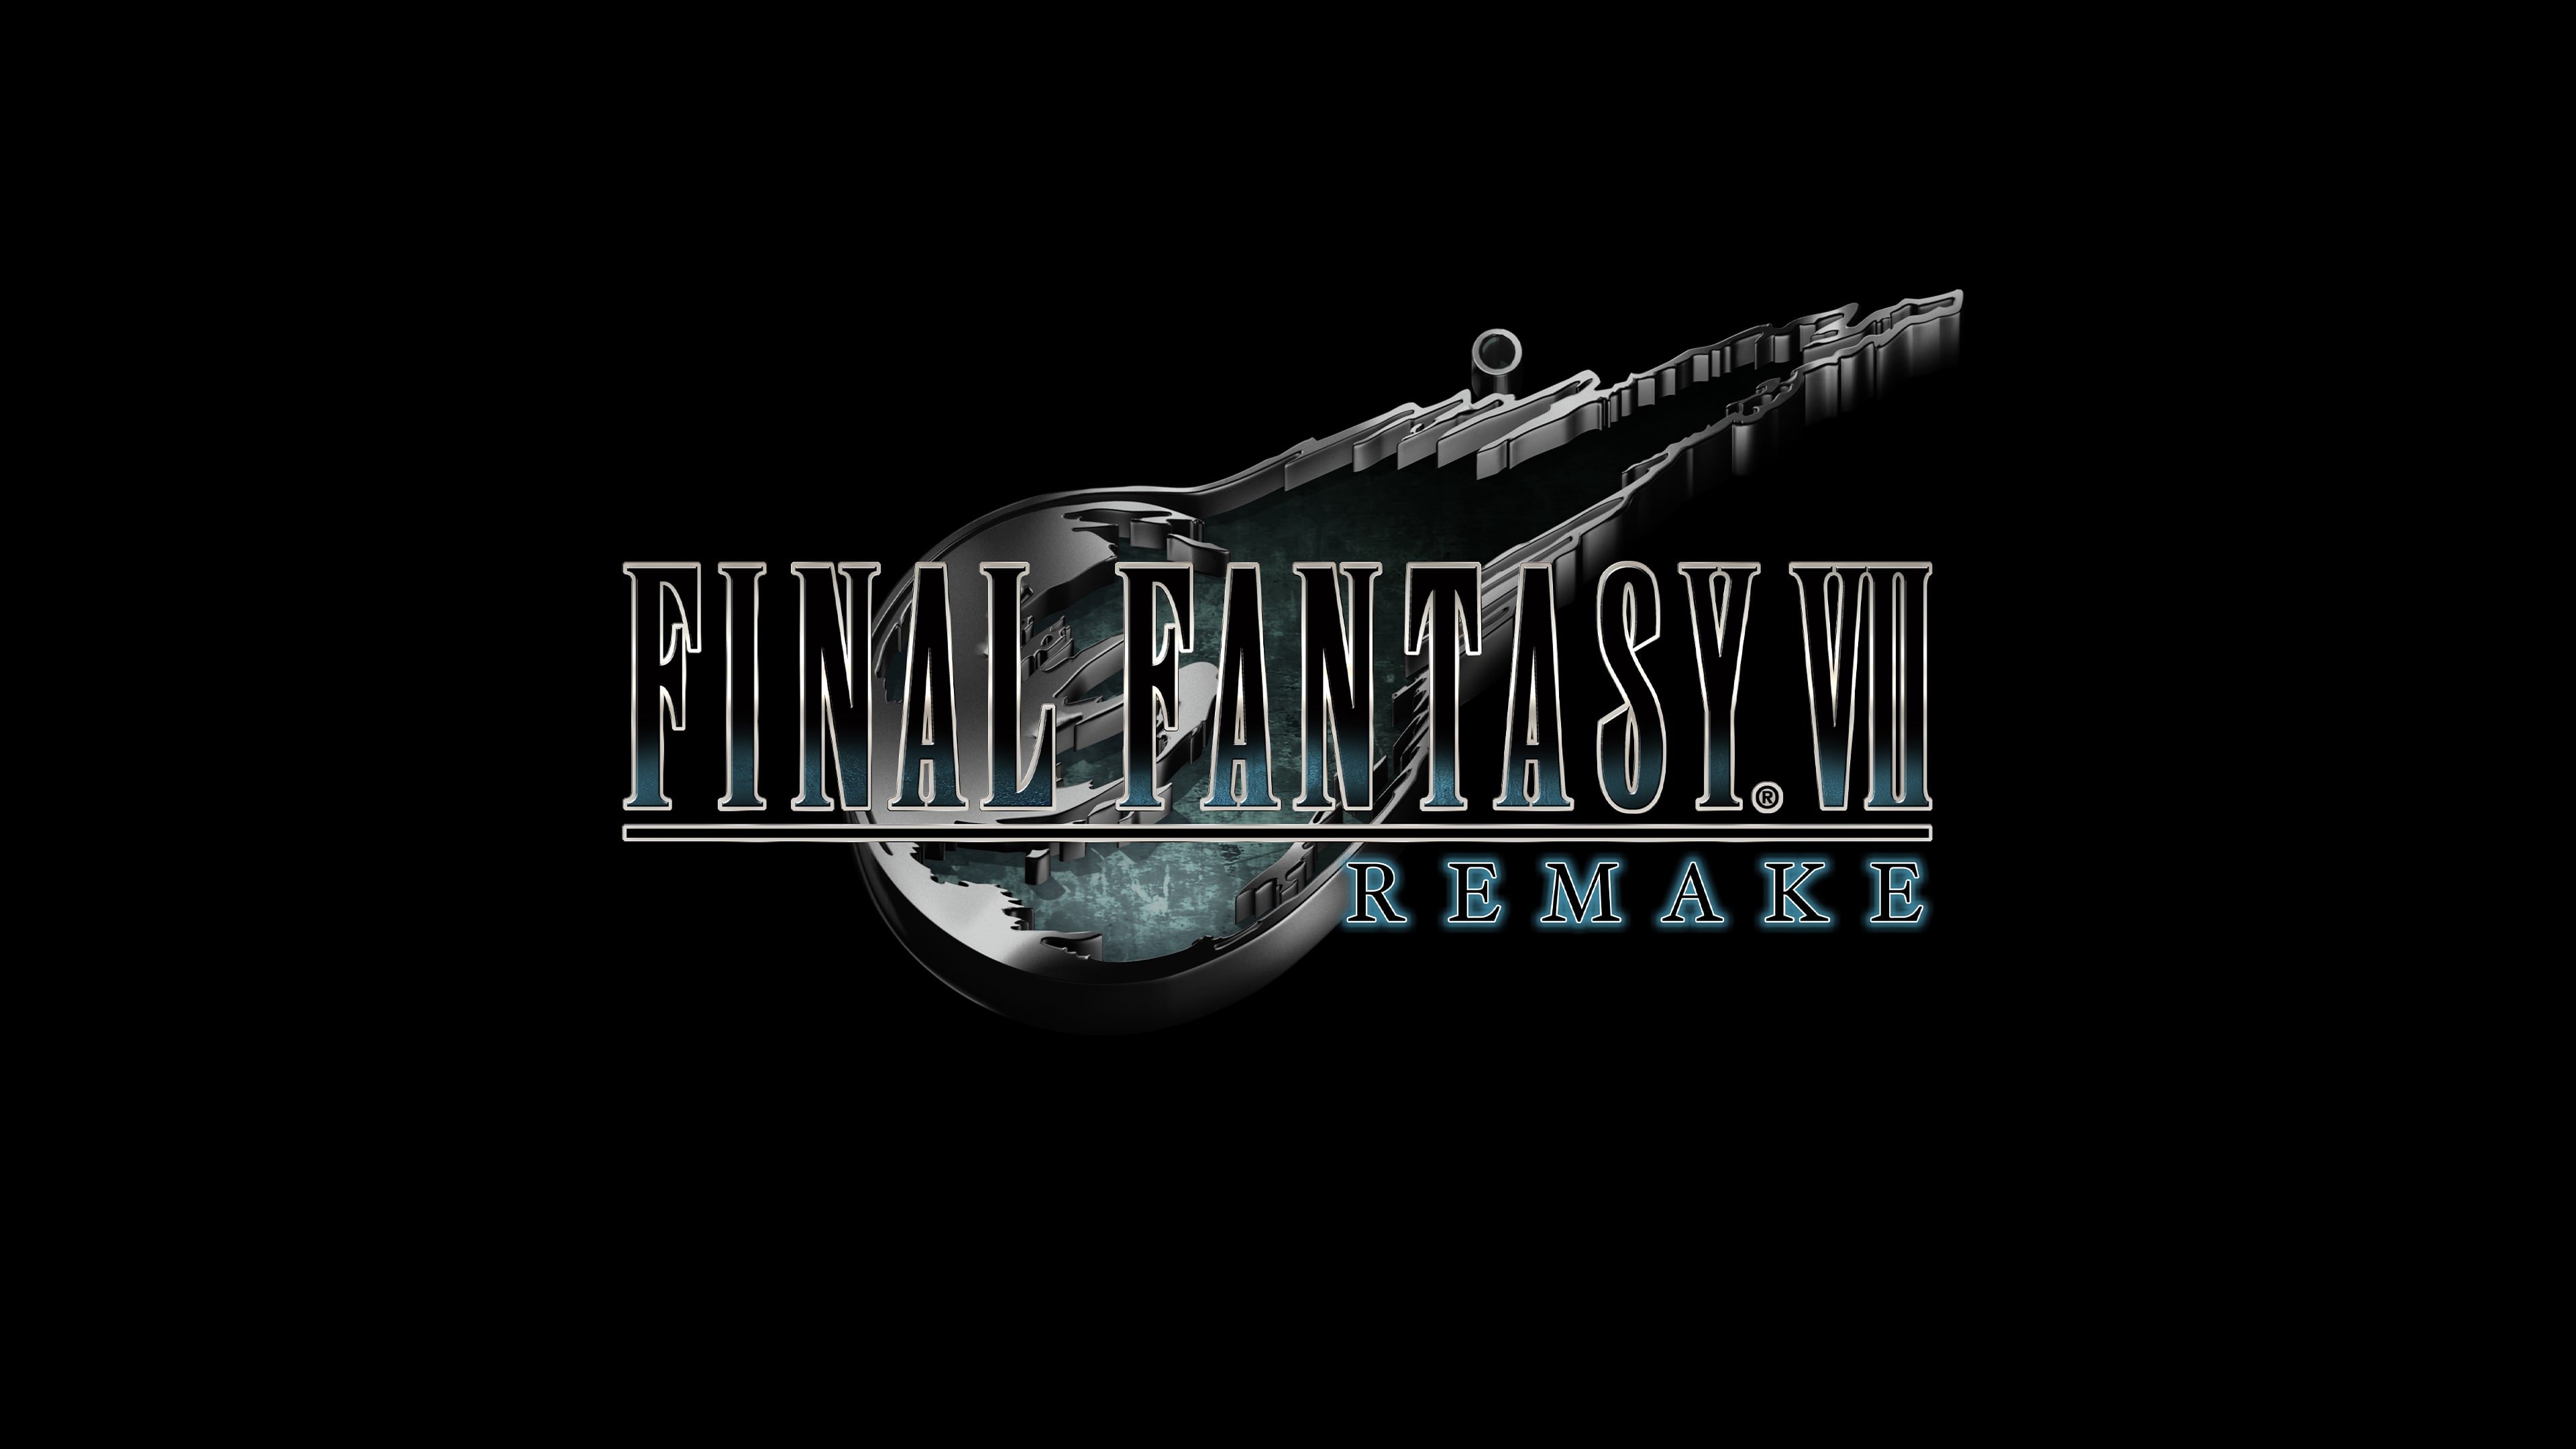 FINAL FANTASY VII REMAKE upgrade for PS4™ version owners